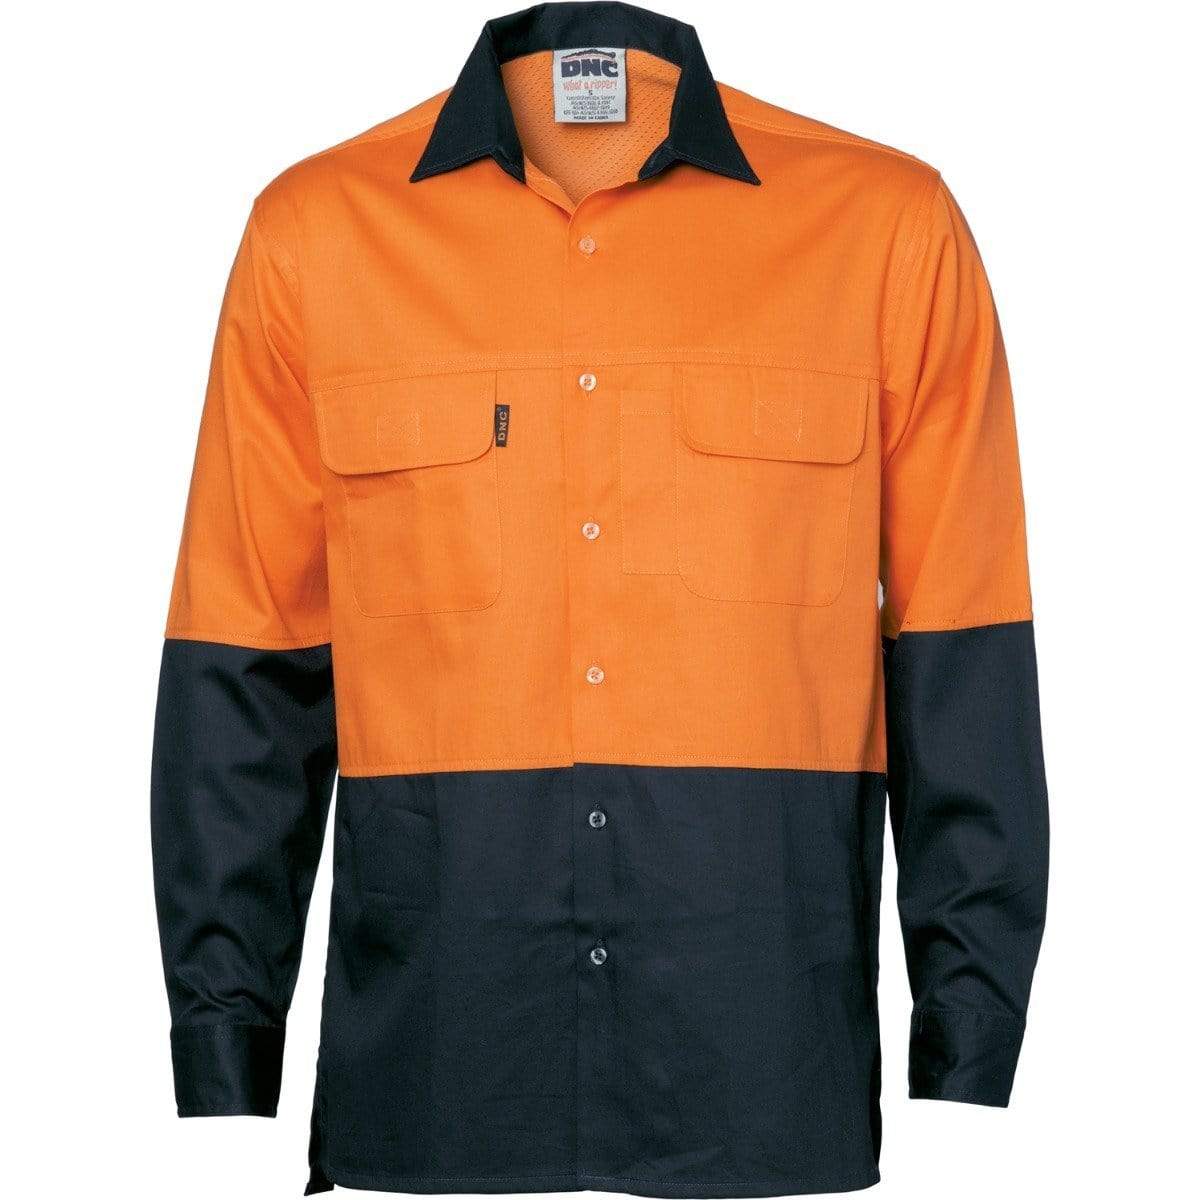 Dnc Workwear Hi-vis 3 Way Cool-breeze Long Sleeve Cotton Shirt - 3938 Work Wear DNC Workwear Orange/Navy XS 